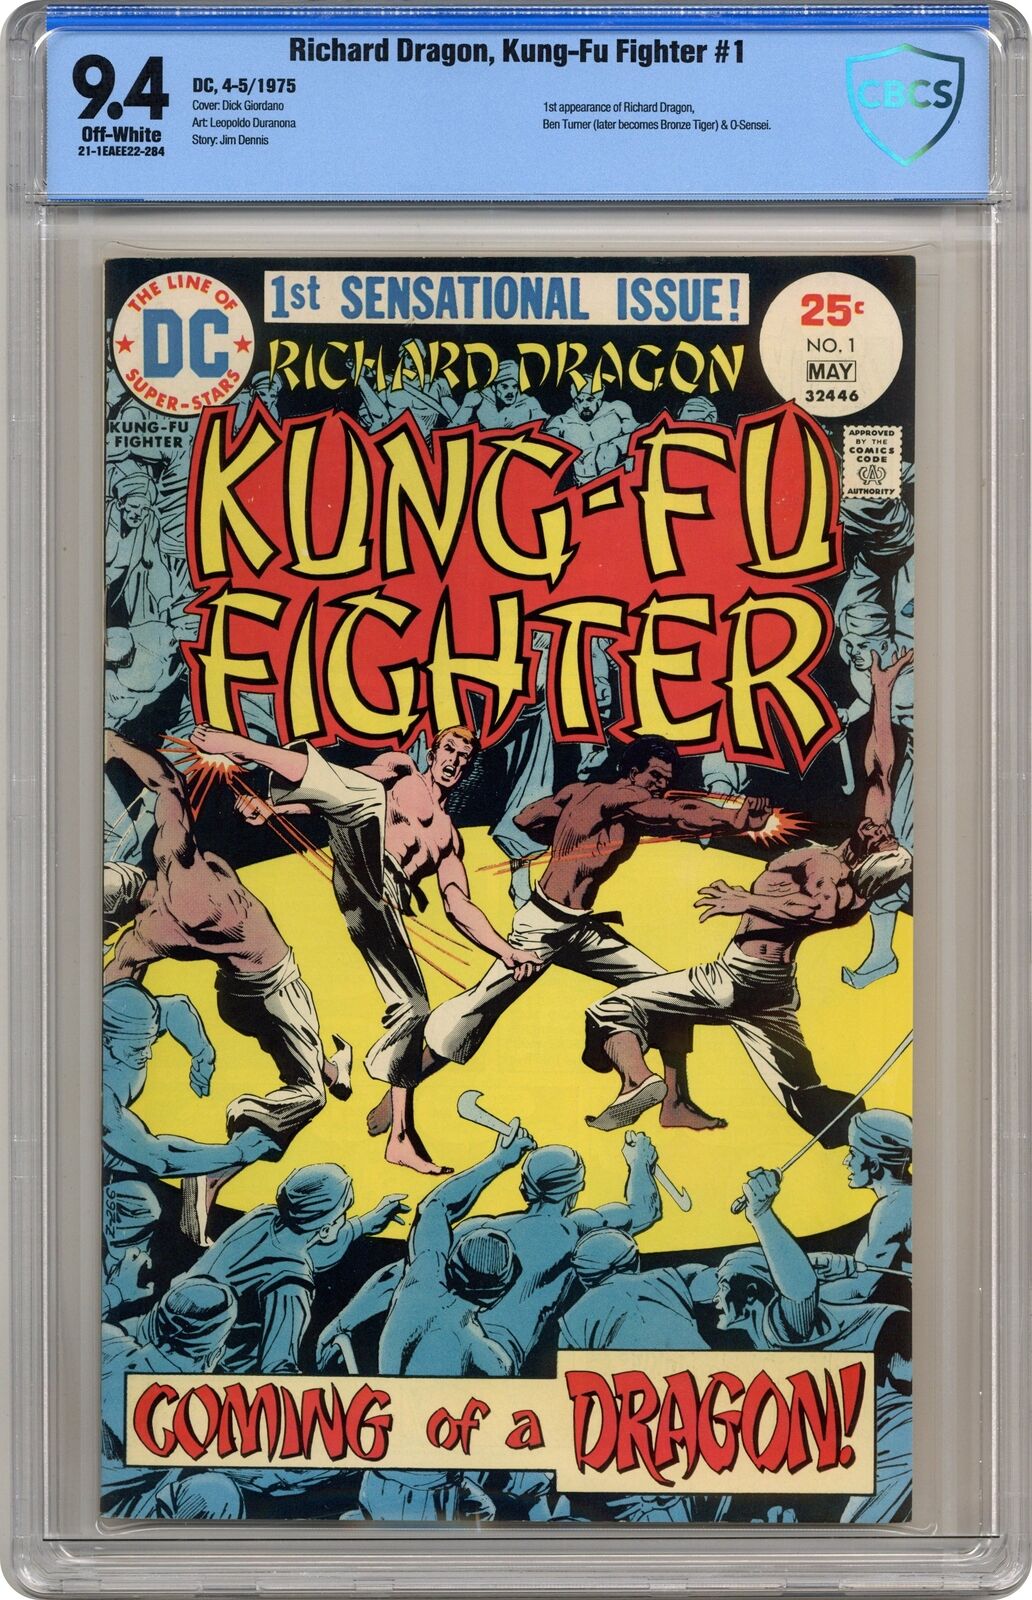 Richard Dragon Kung Fu Fighter #1 CBCS 9.4 1975 21-1EAEE22-284